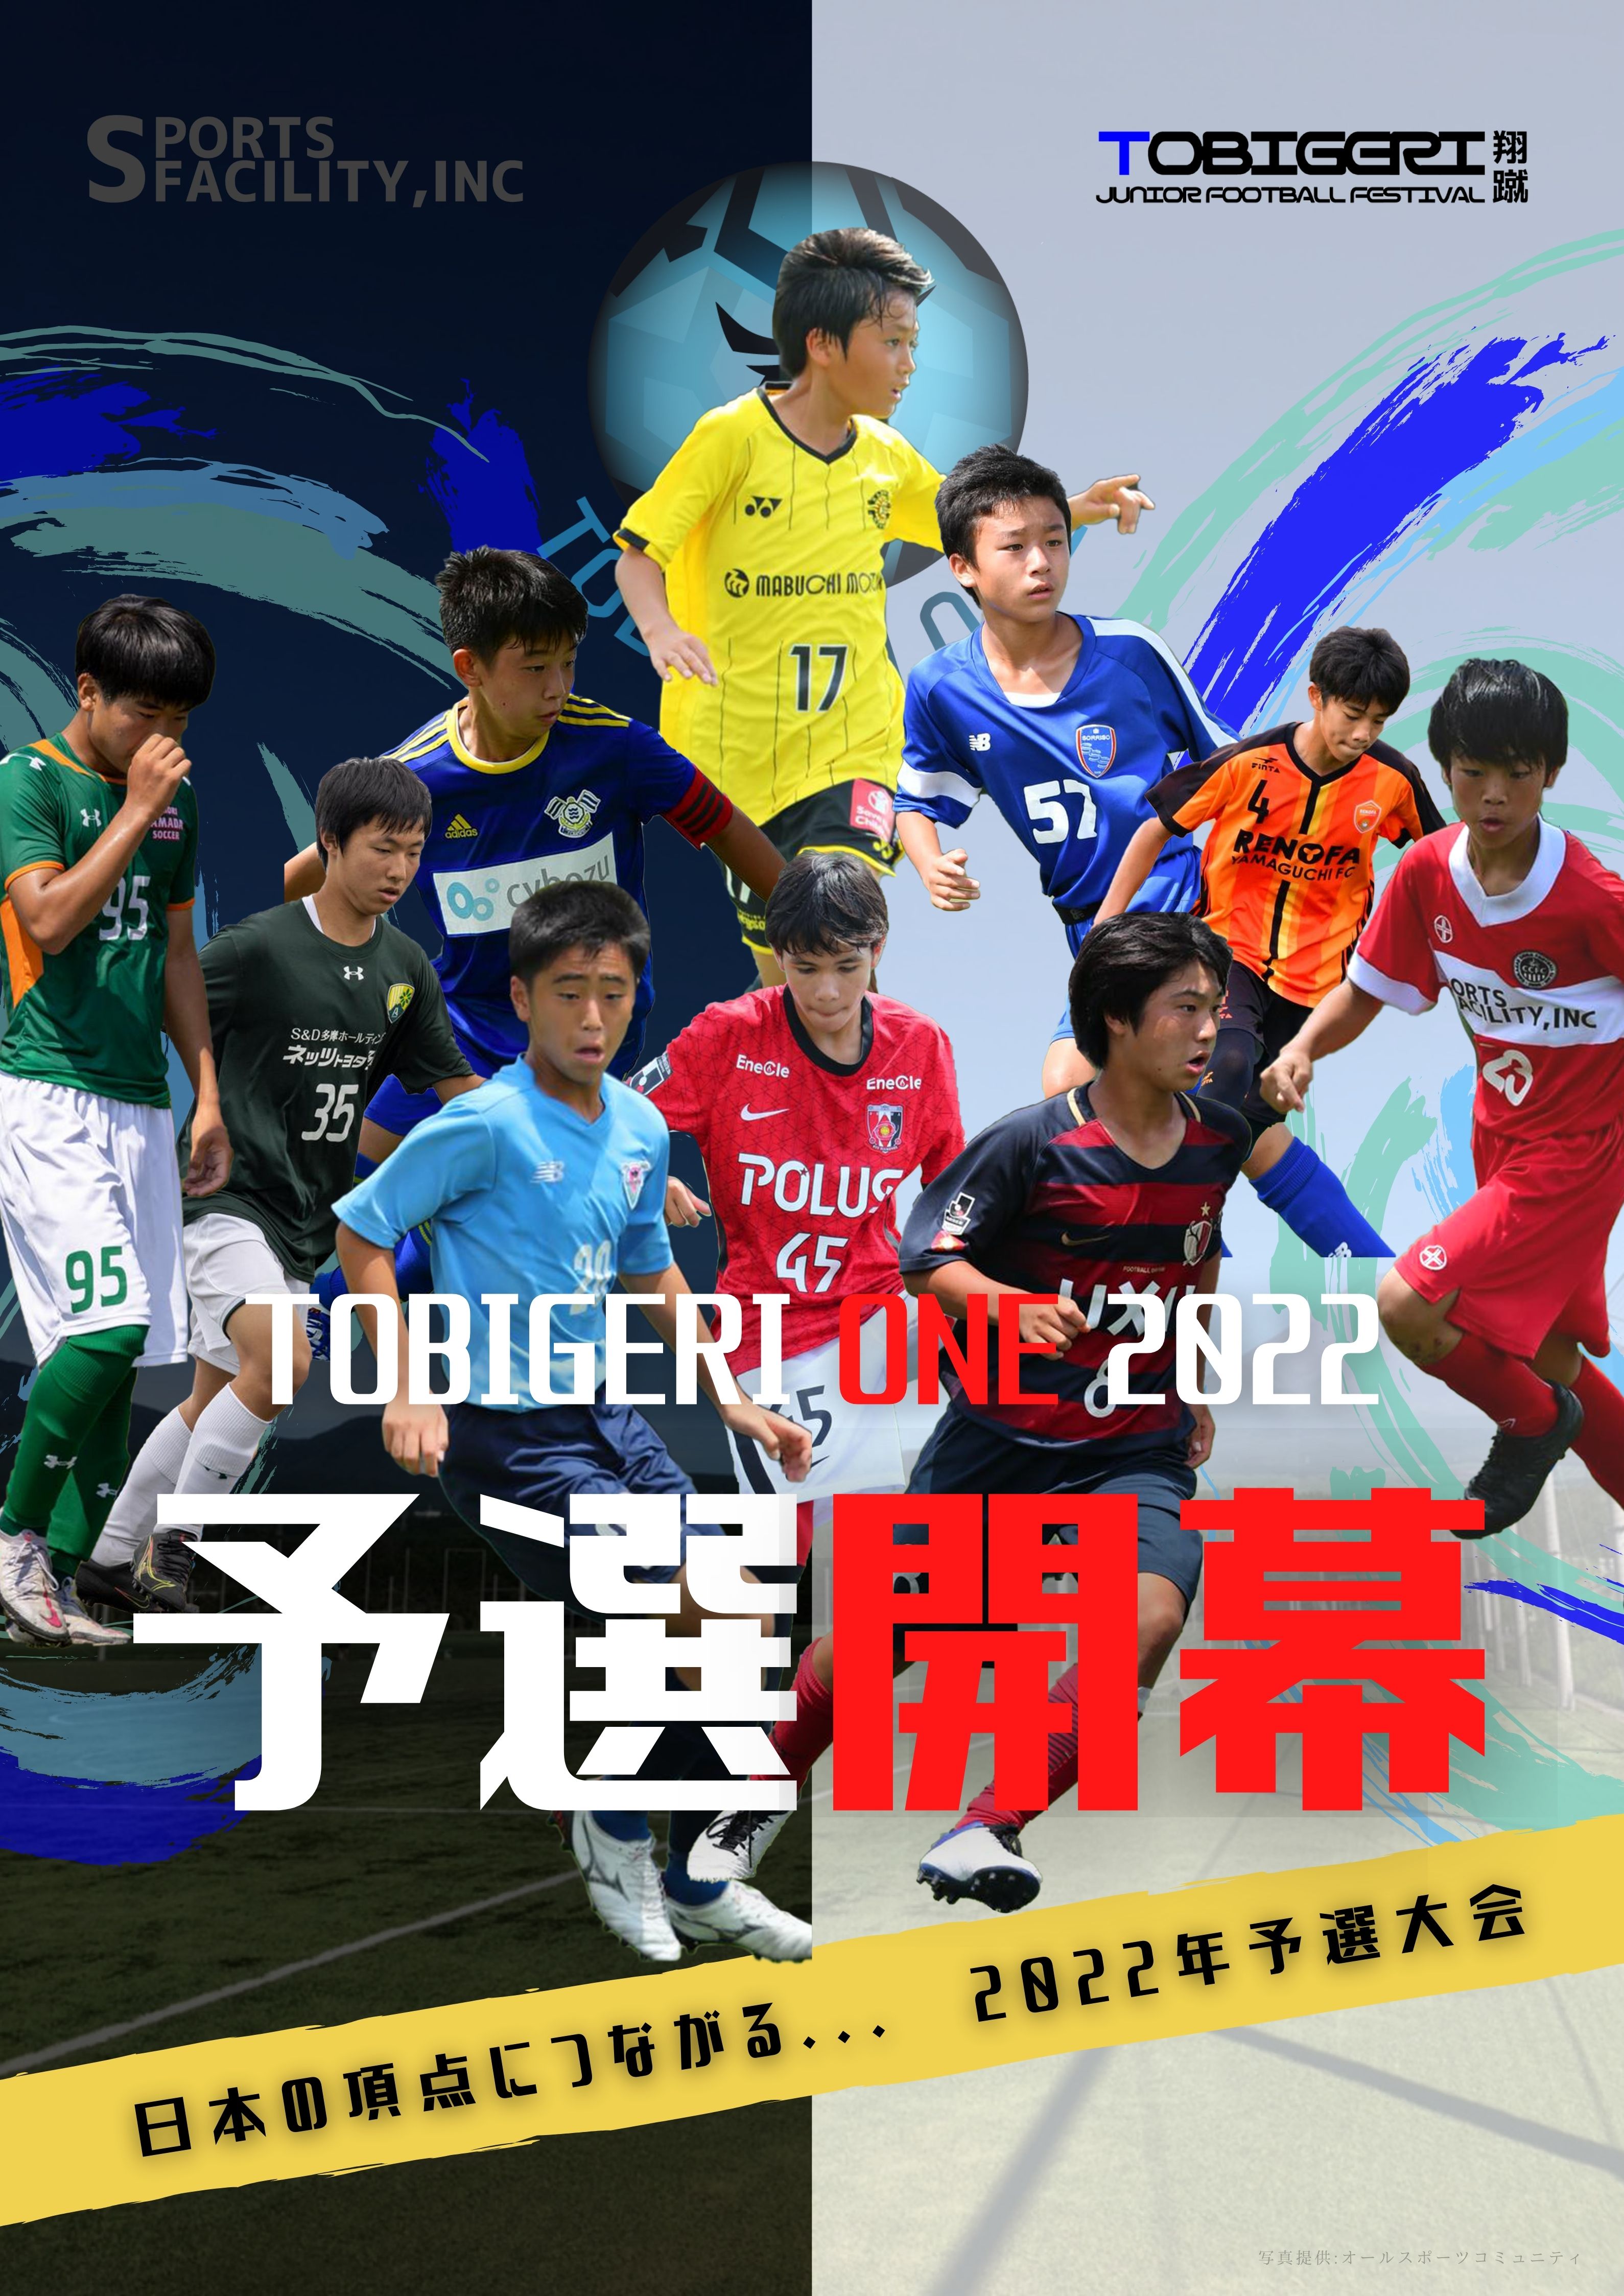 【U-12 関東予選】TOBIGERI ONE 2022 予選大会 募集受付開始のお知らせ📣まずはU-12 関東予選 募集スタートしました✨